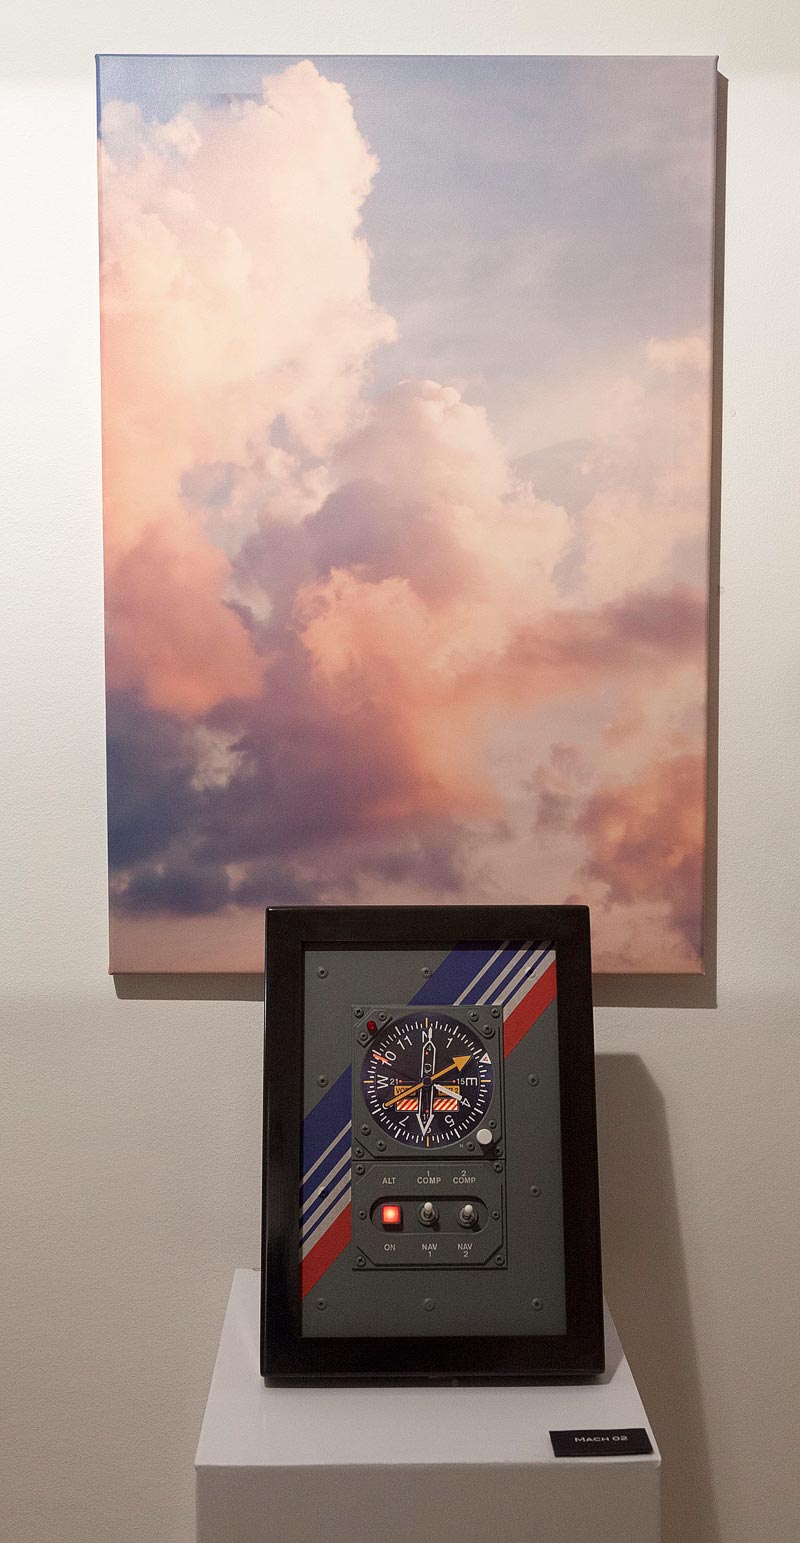  - <b>Mach 02</b> - Collection Horloge de Bord <br>Dim. : 33.5 x 24.5 x 4 cm